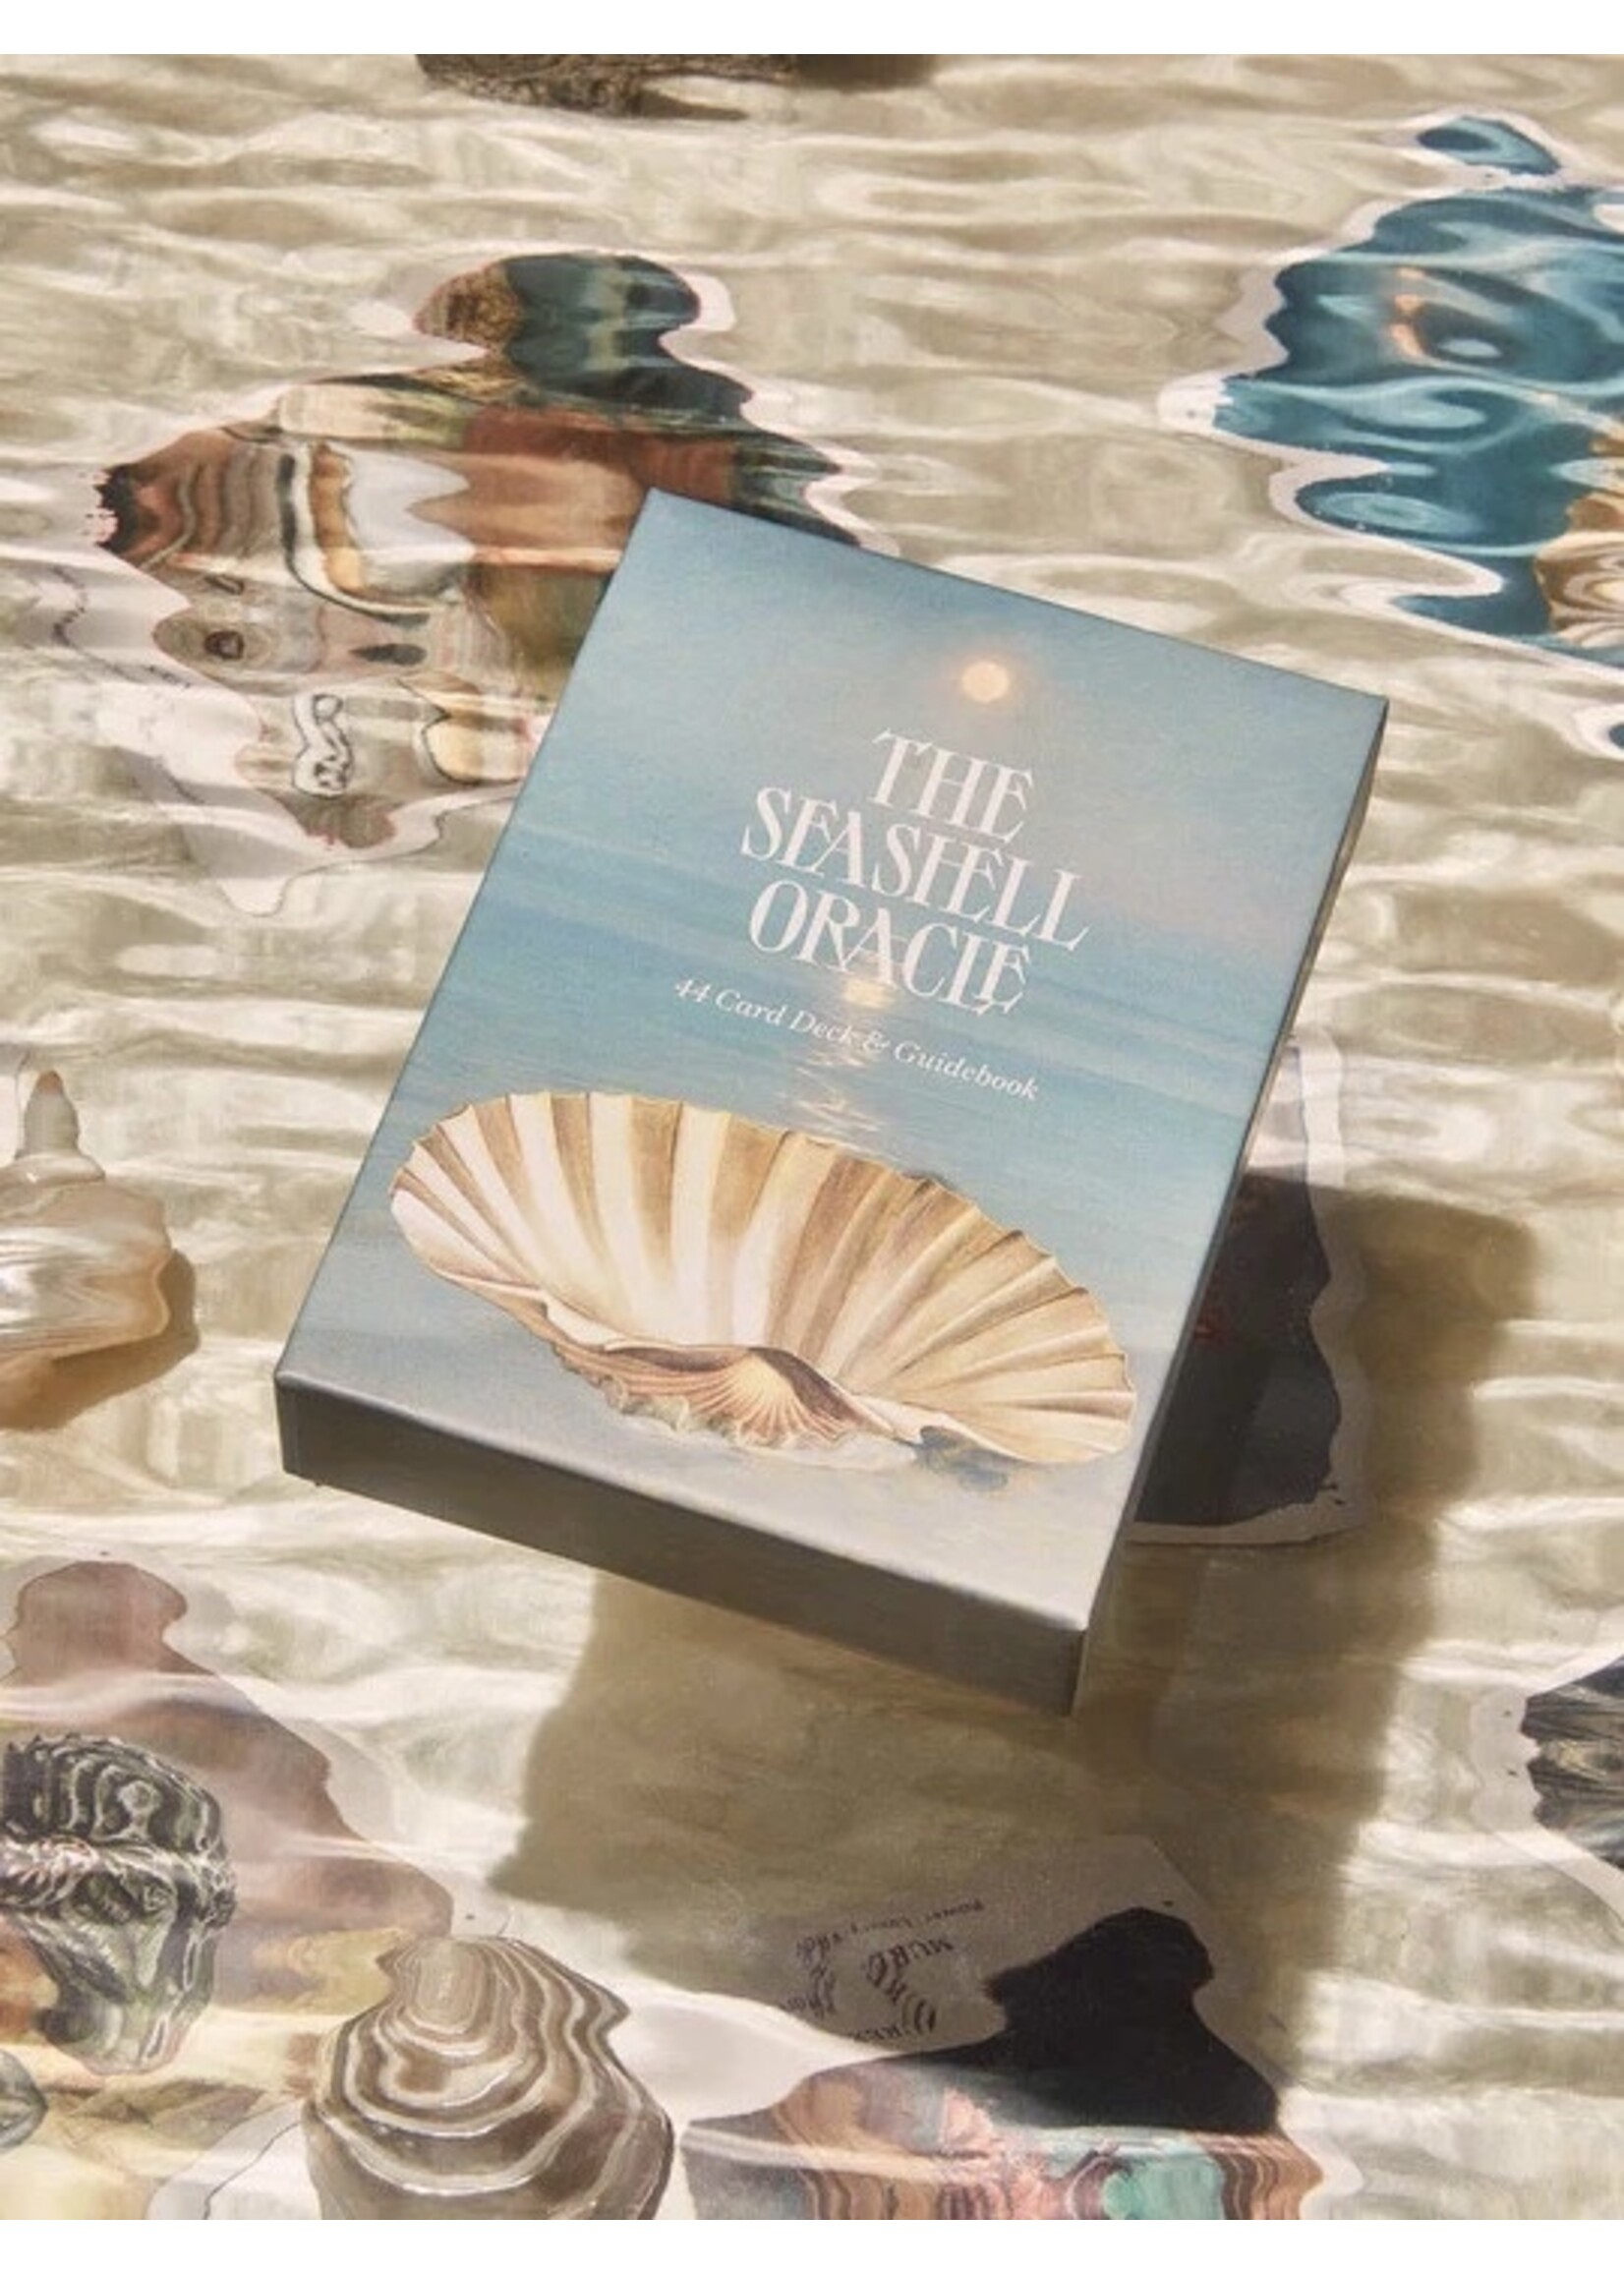 Broccoli Tarot Card "The Seashell Oracle" by BROCCOLI